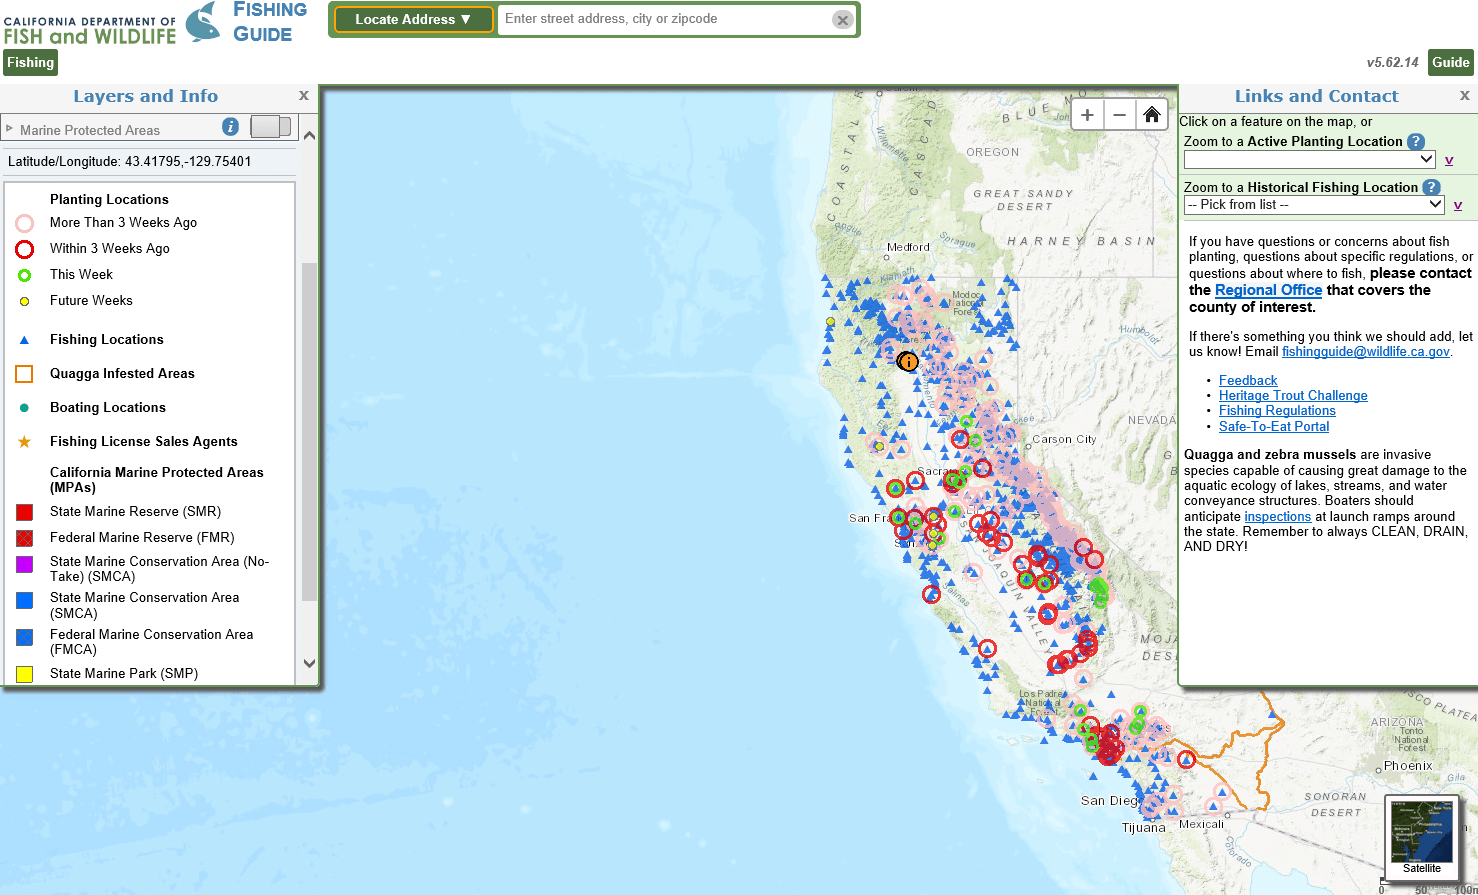 California State Parks GIS Data & Maps